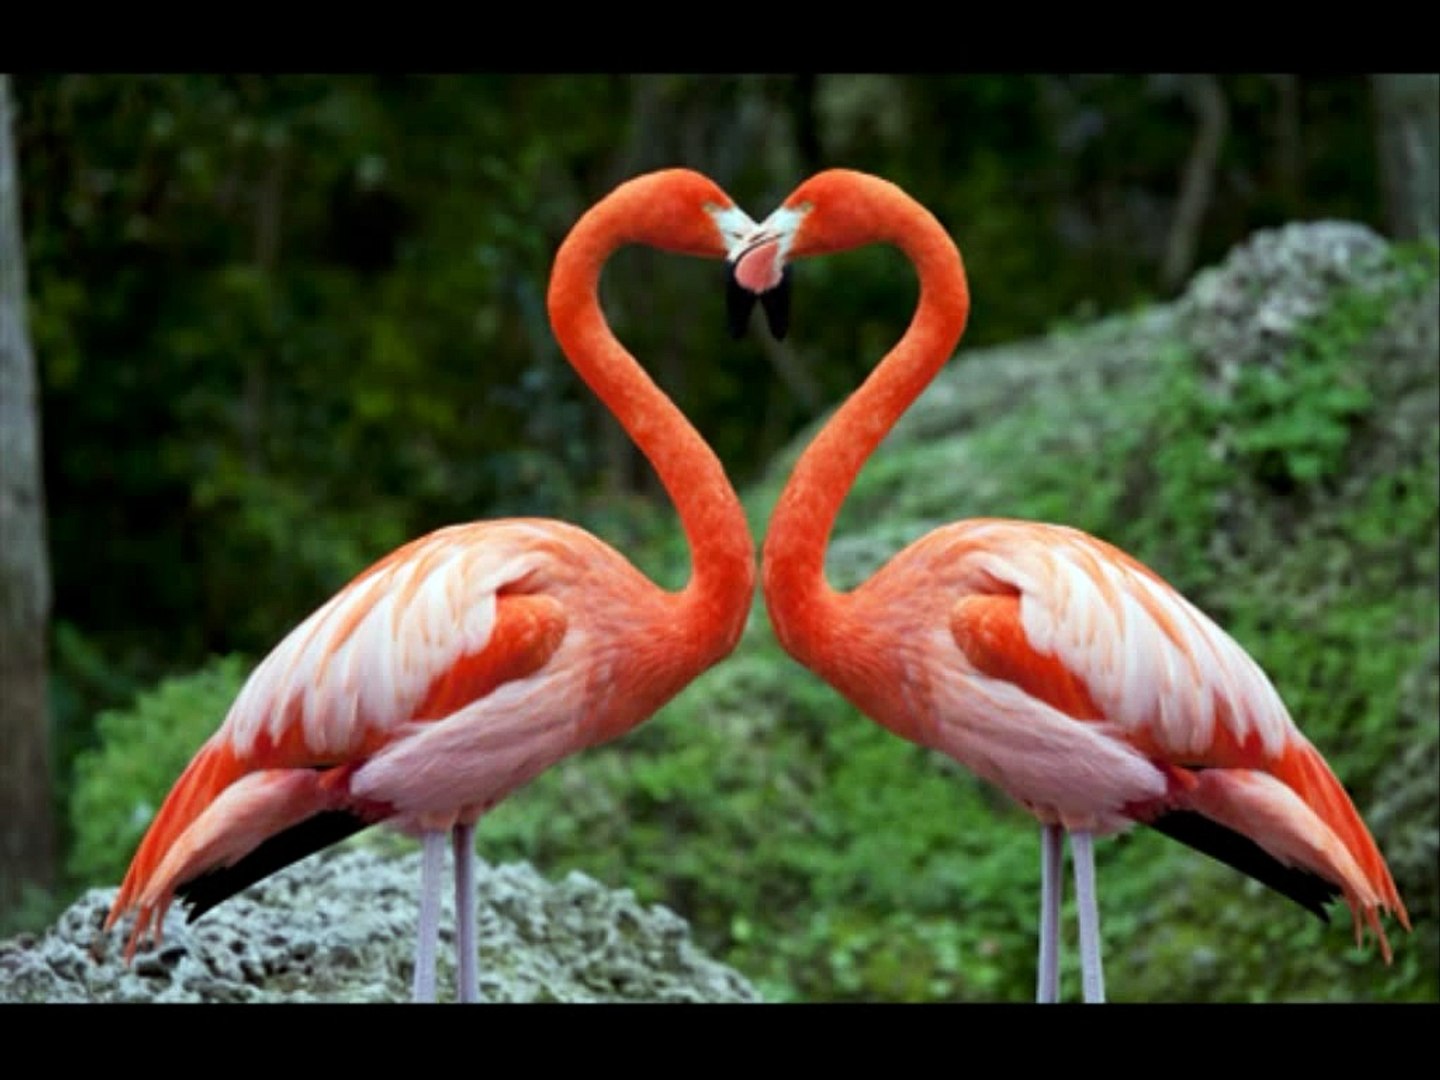 Flamingo Band - Nece mama doci (uzivo)